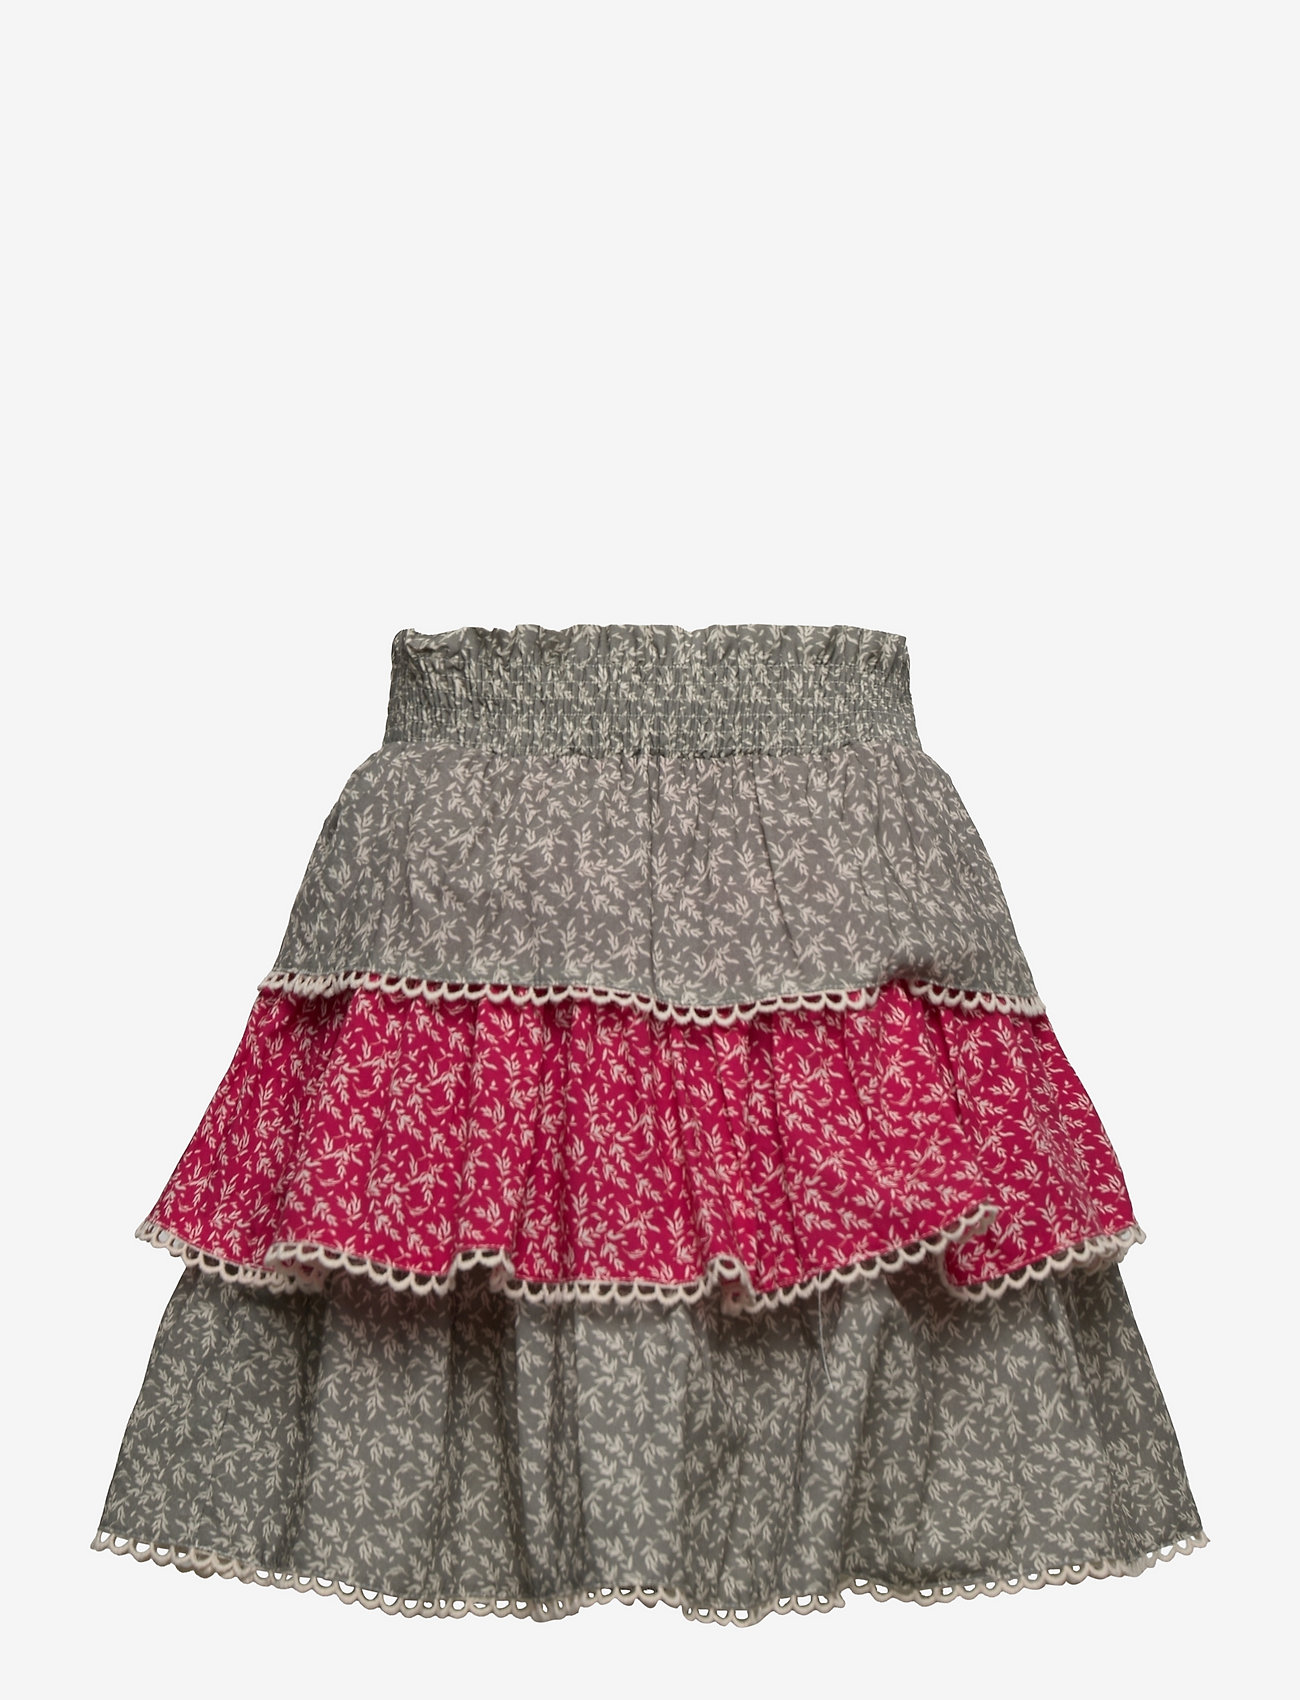 Malina - Mini Aster skirt - spódnice mini - leaf - 1